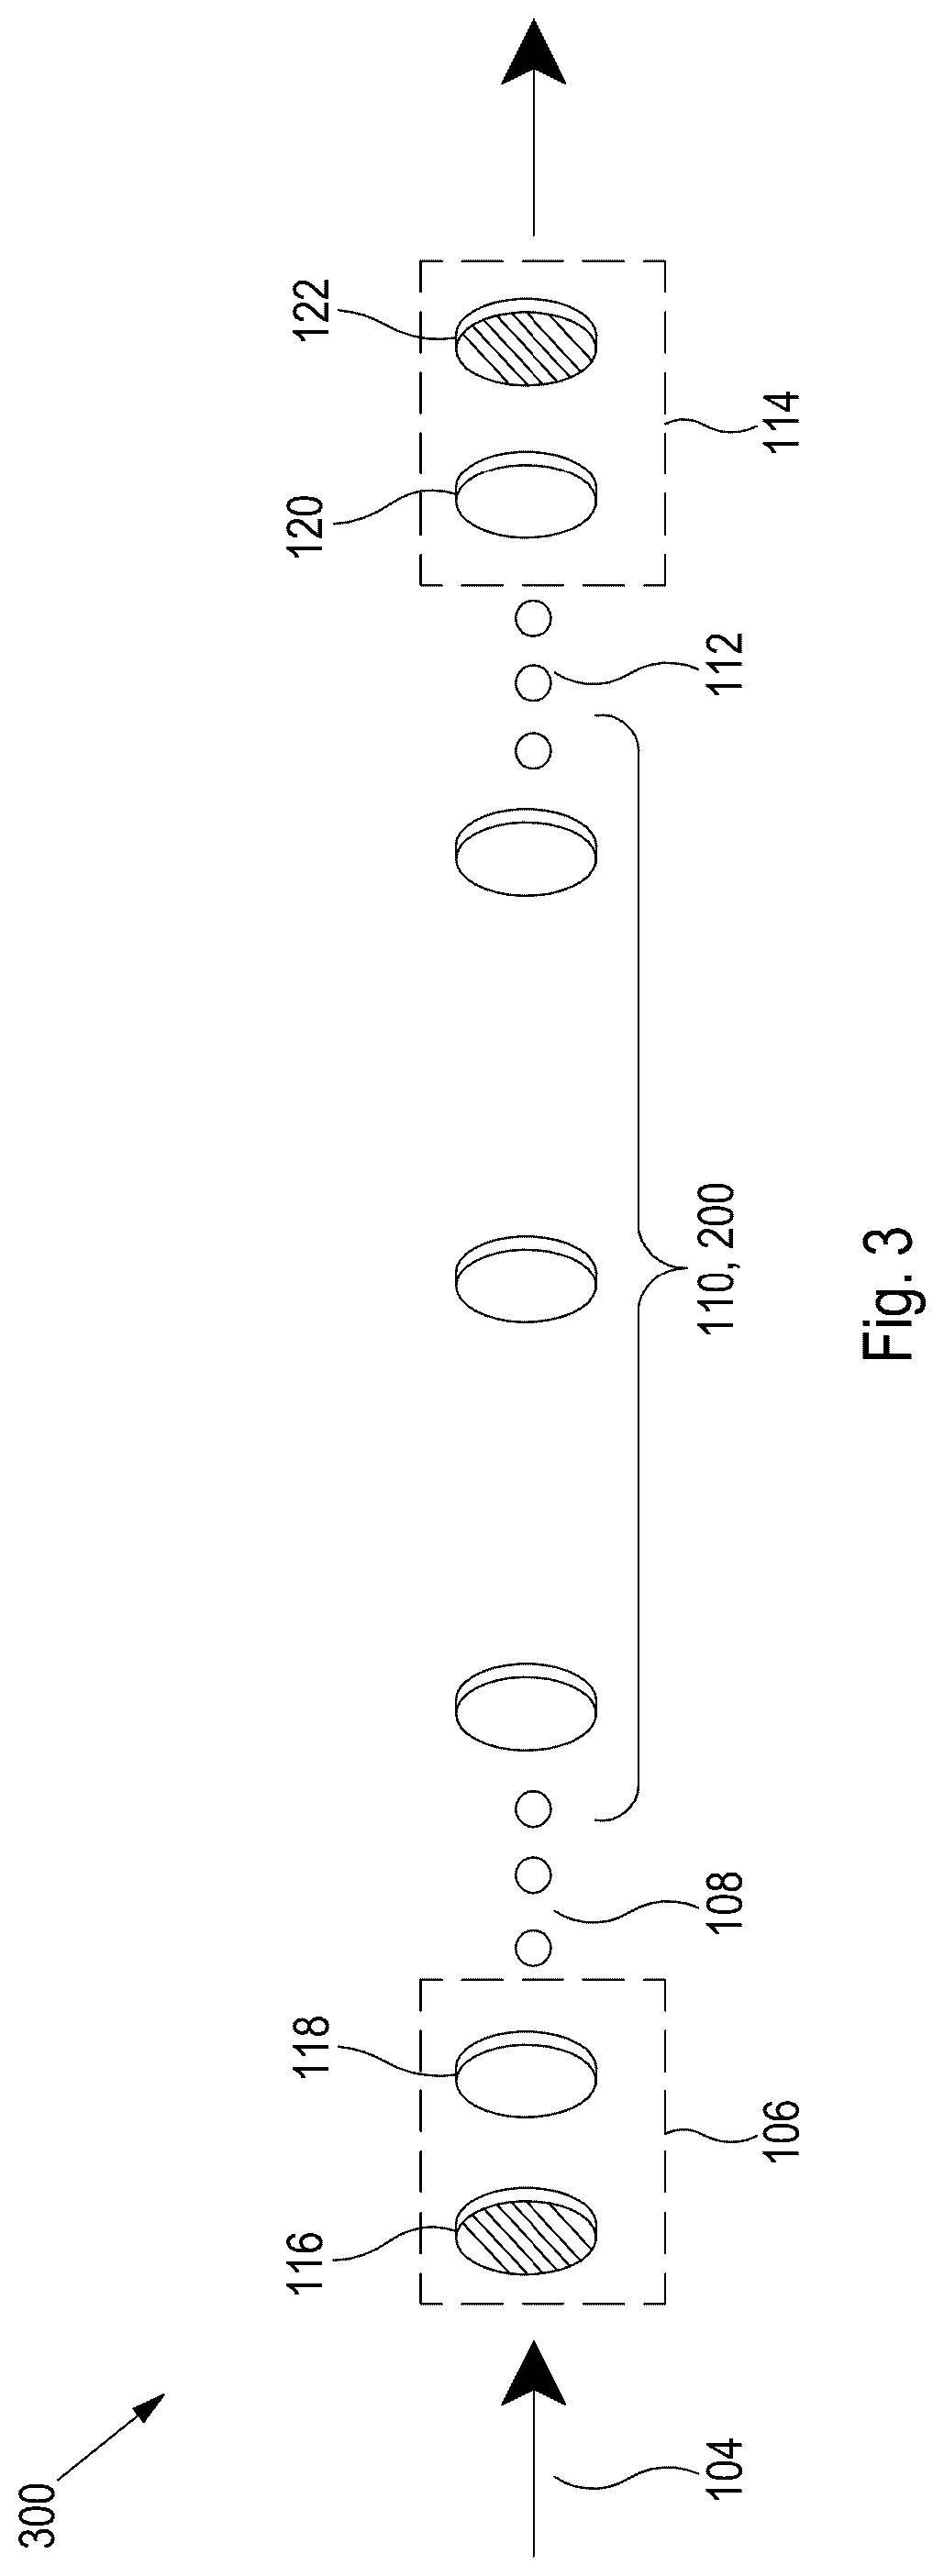 Single-shot mueller matrix polarimeter